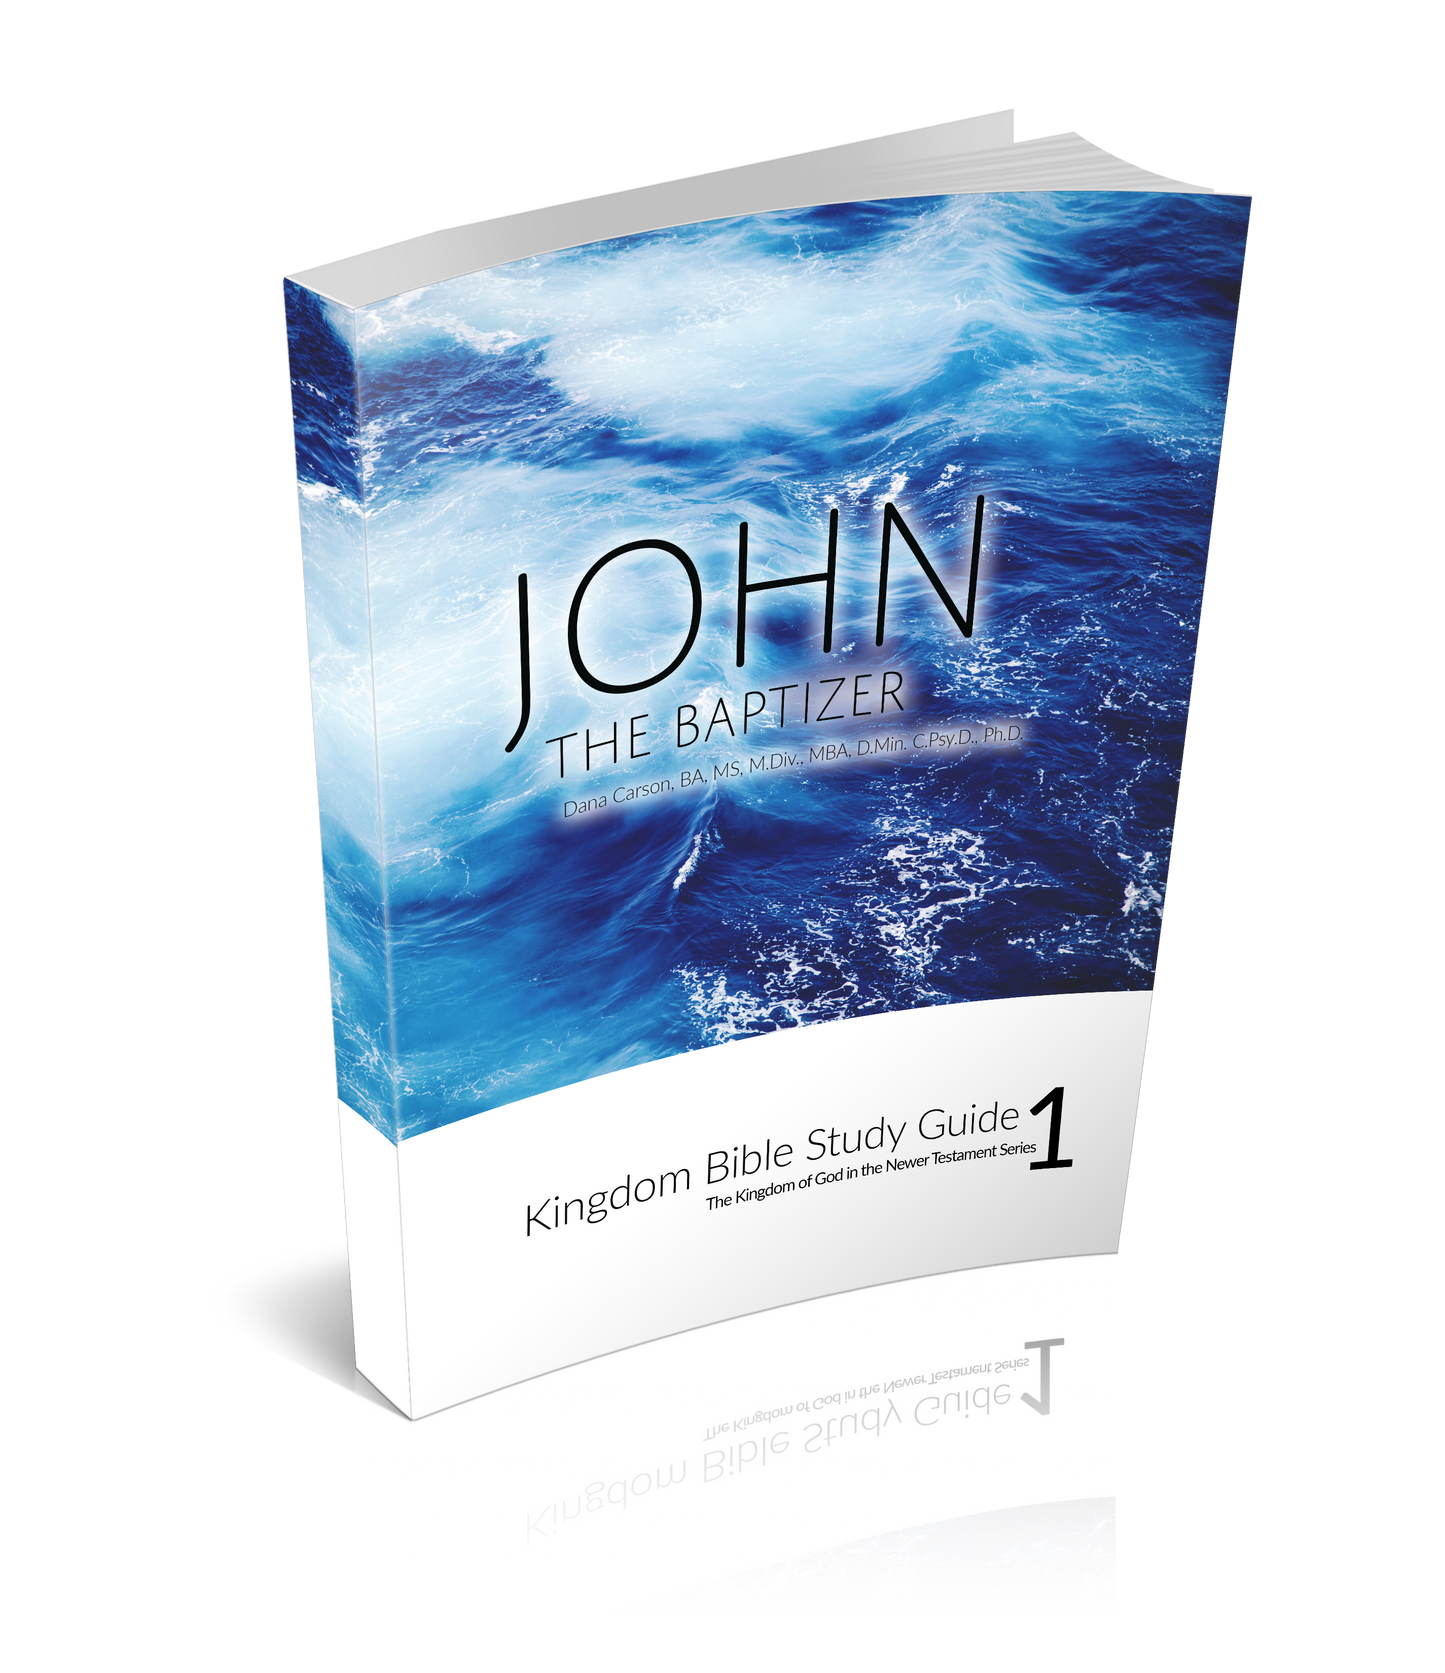 John the Baptizer Kingdom Bible Study Guide